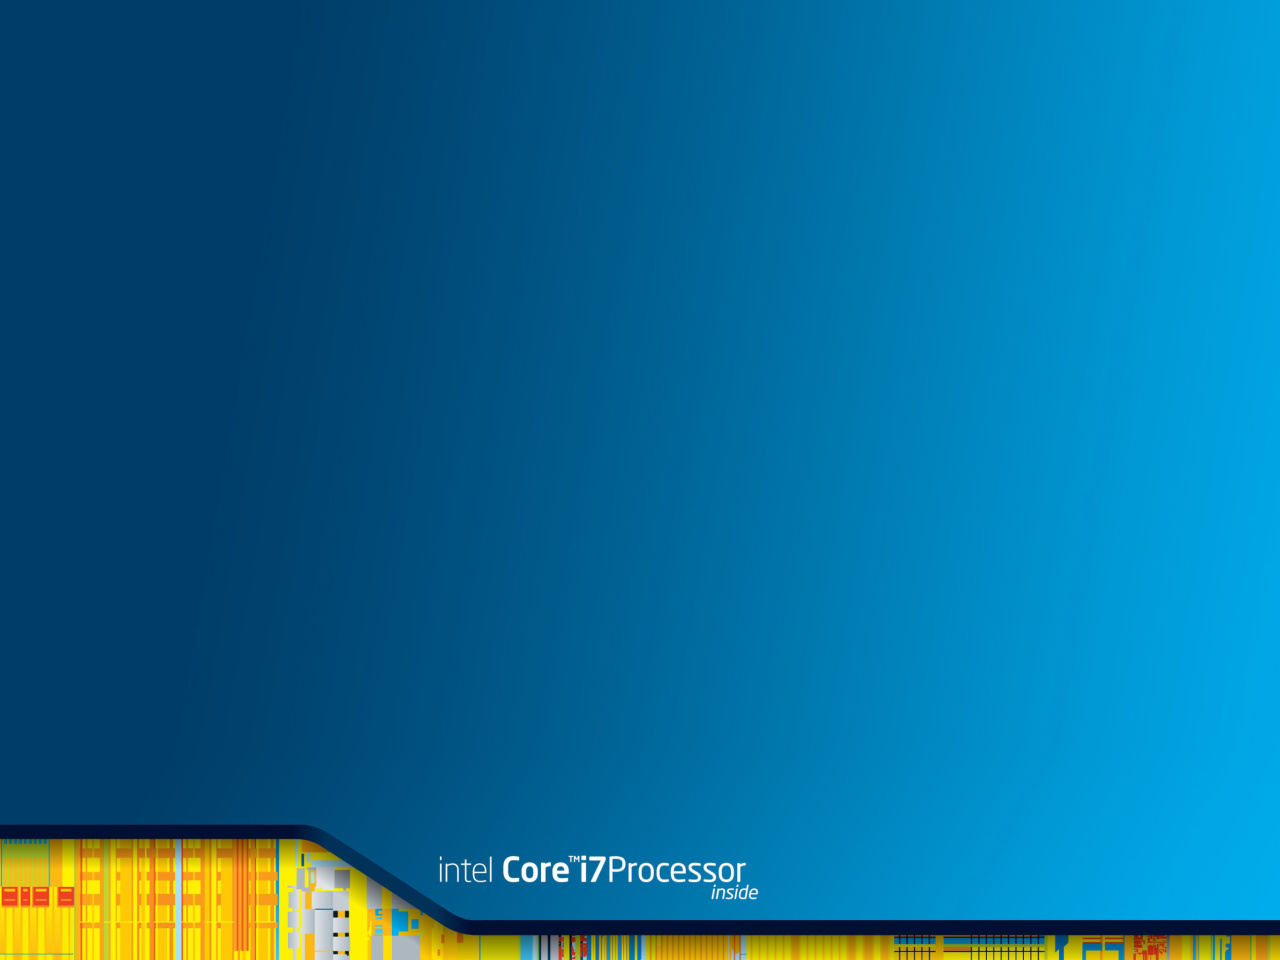 Das Intel Core i7 Processor Wallpaper 1280x960